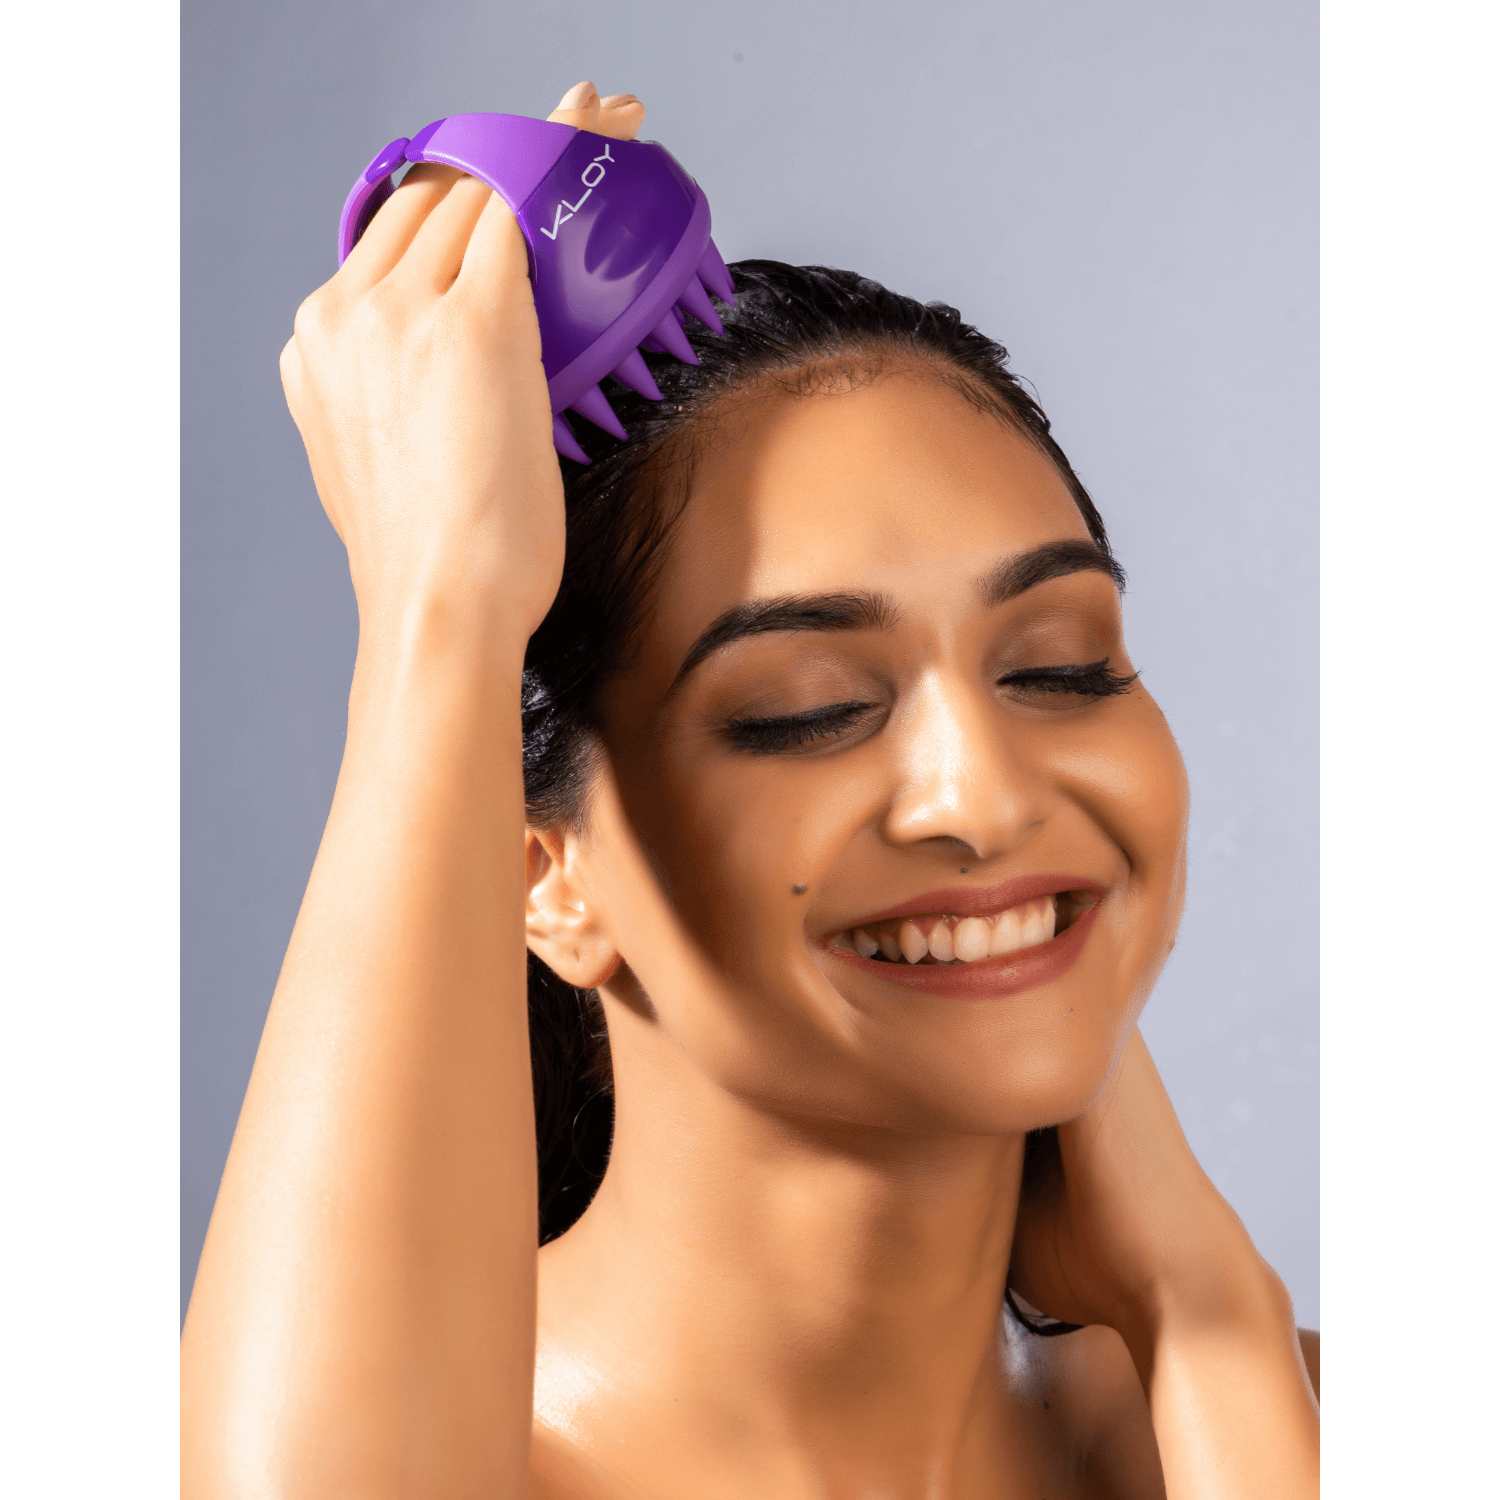 Combo of Kloy Hair Massage Brush - Purple & Black